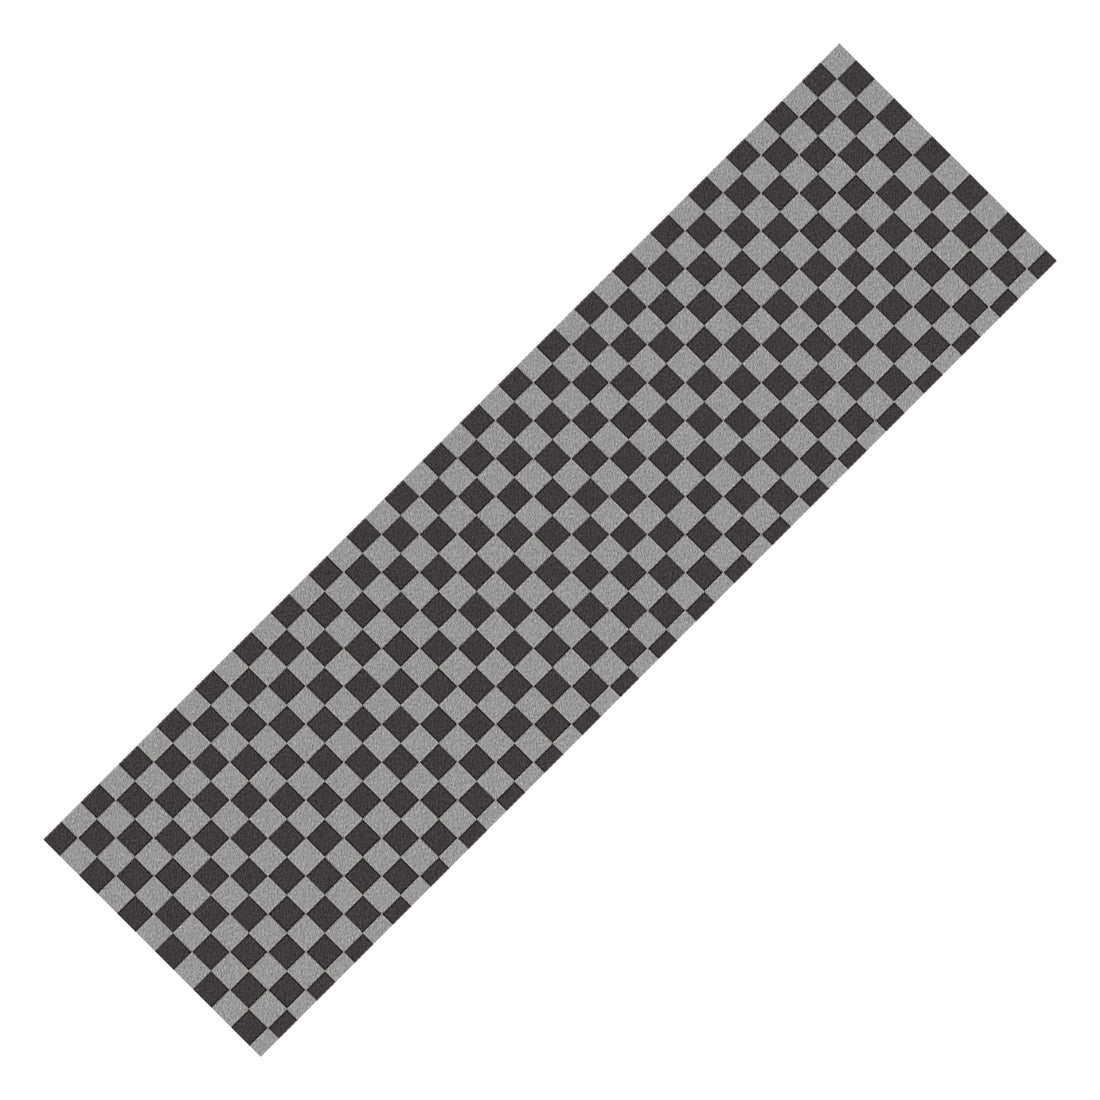 Fruity Griptape - Checkered Black Grey Check Griptape